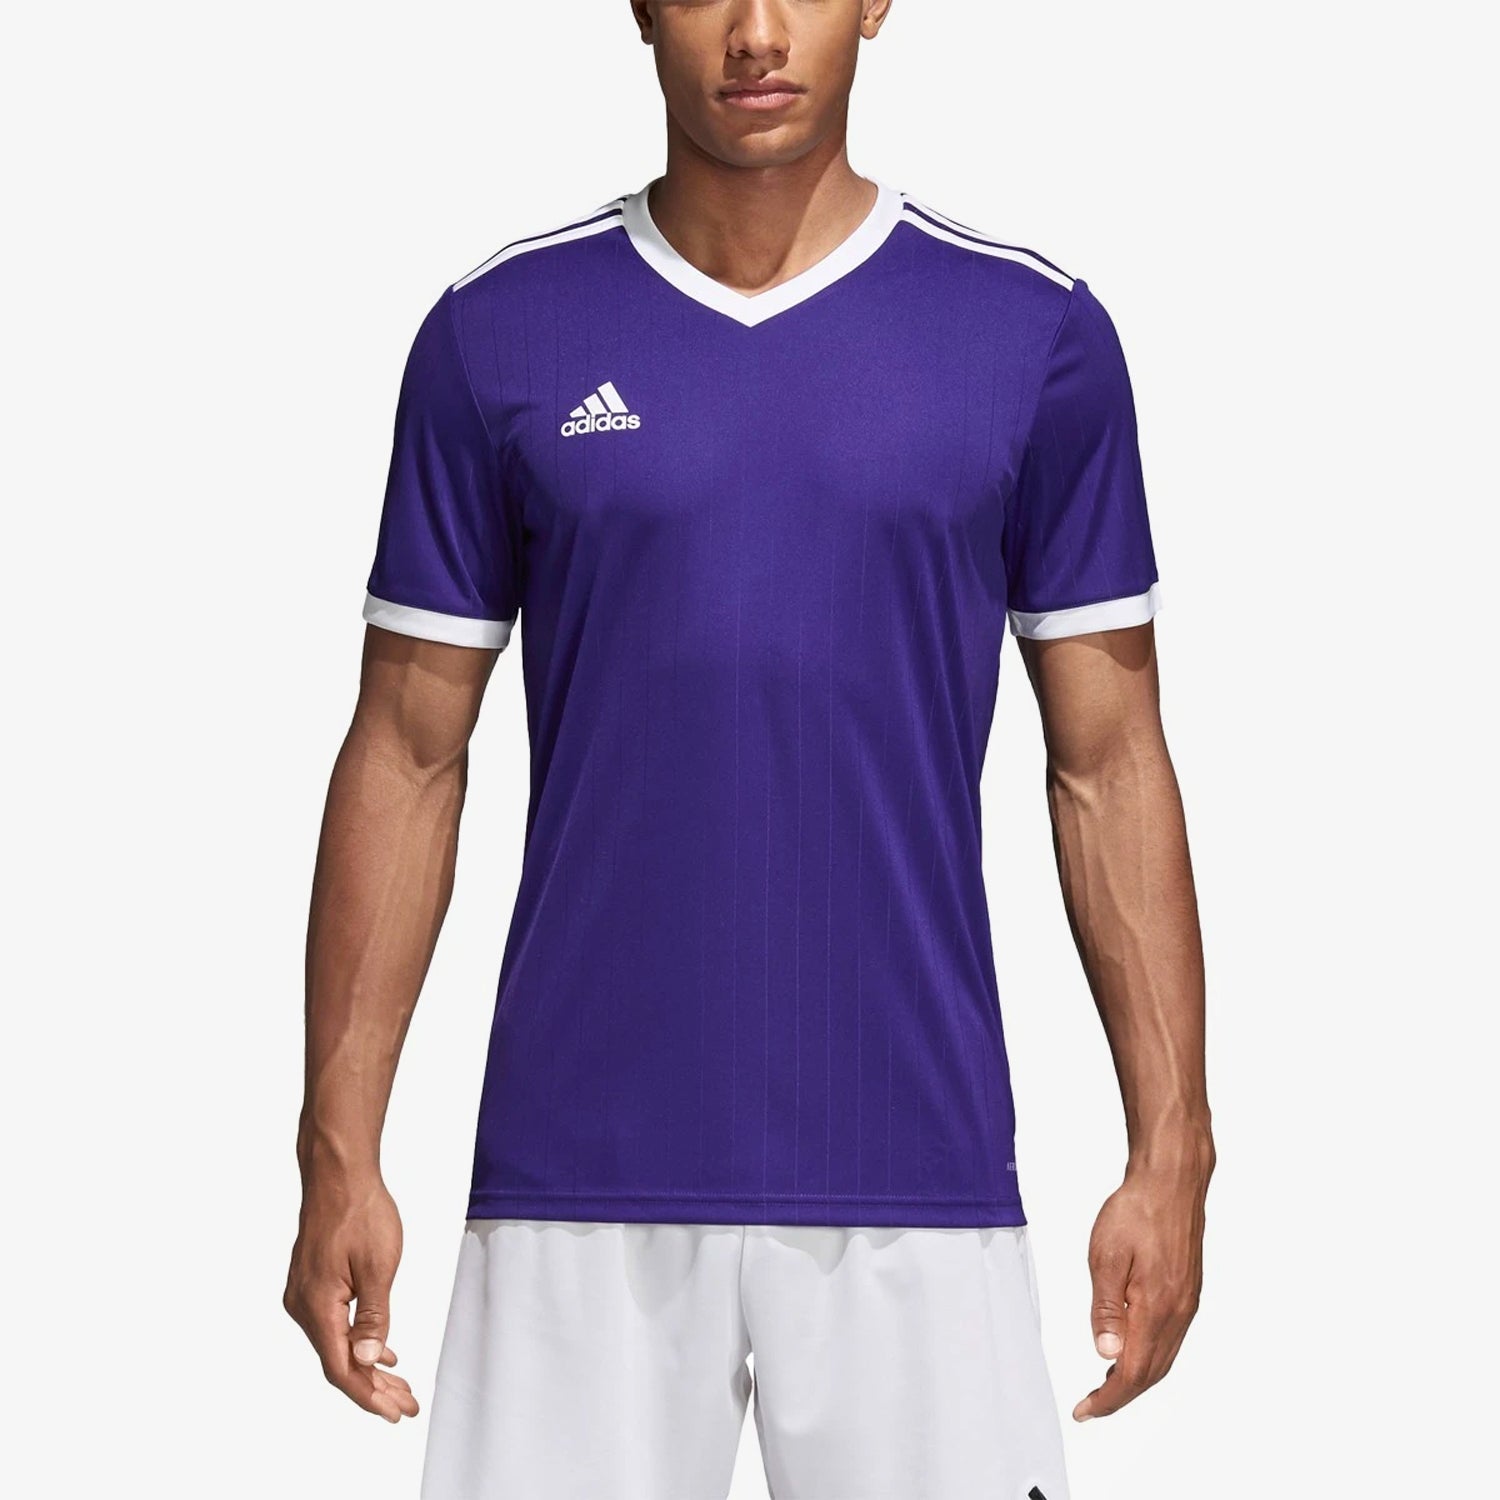 Youth Tabela 18 Soccer Jersey - Purple